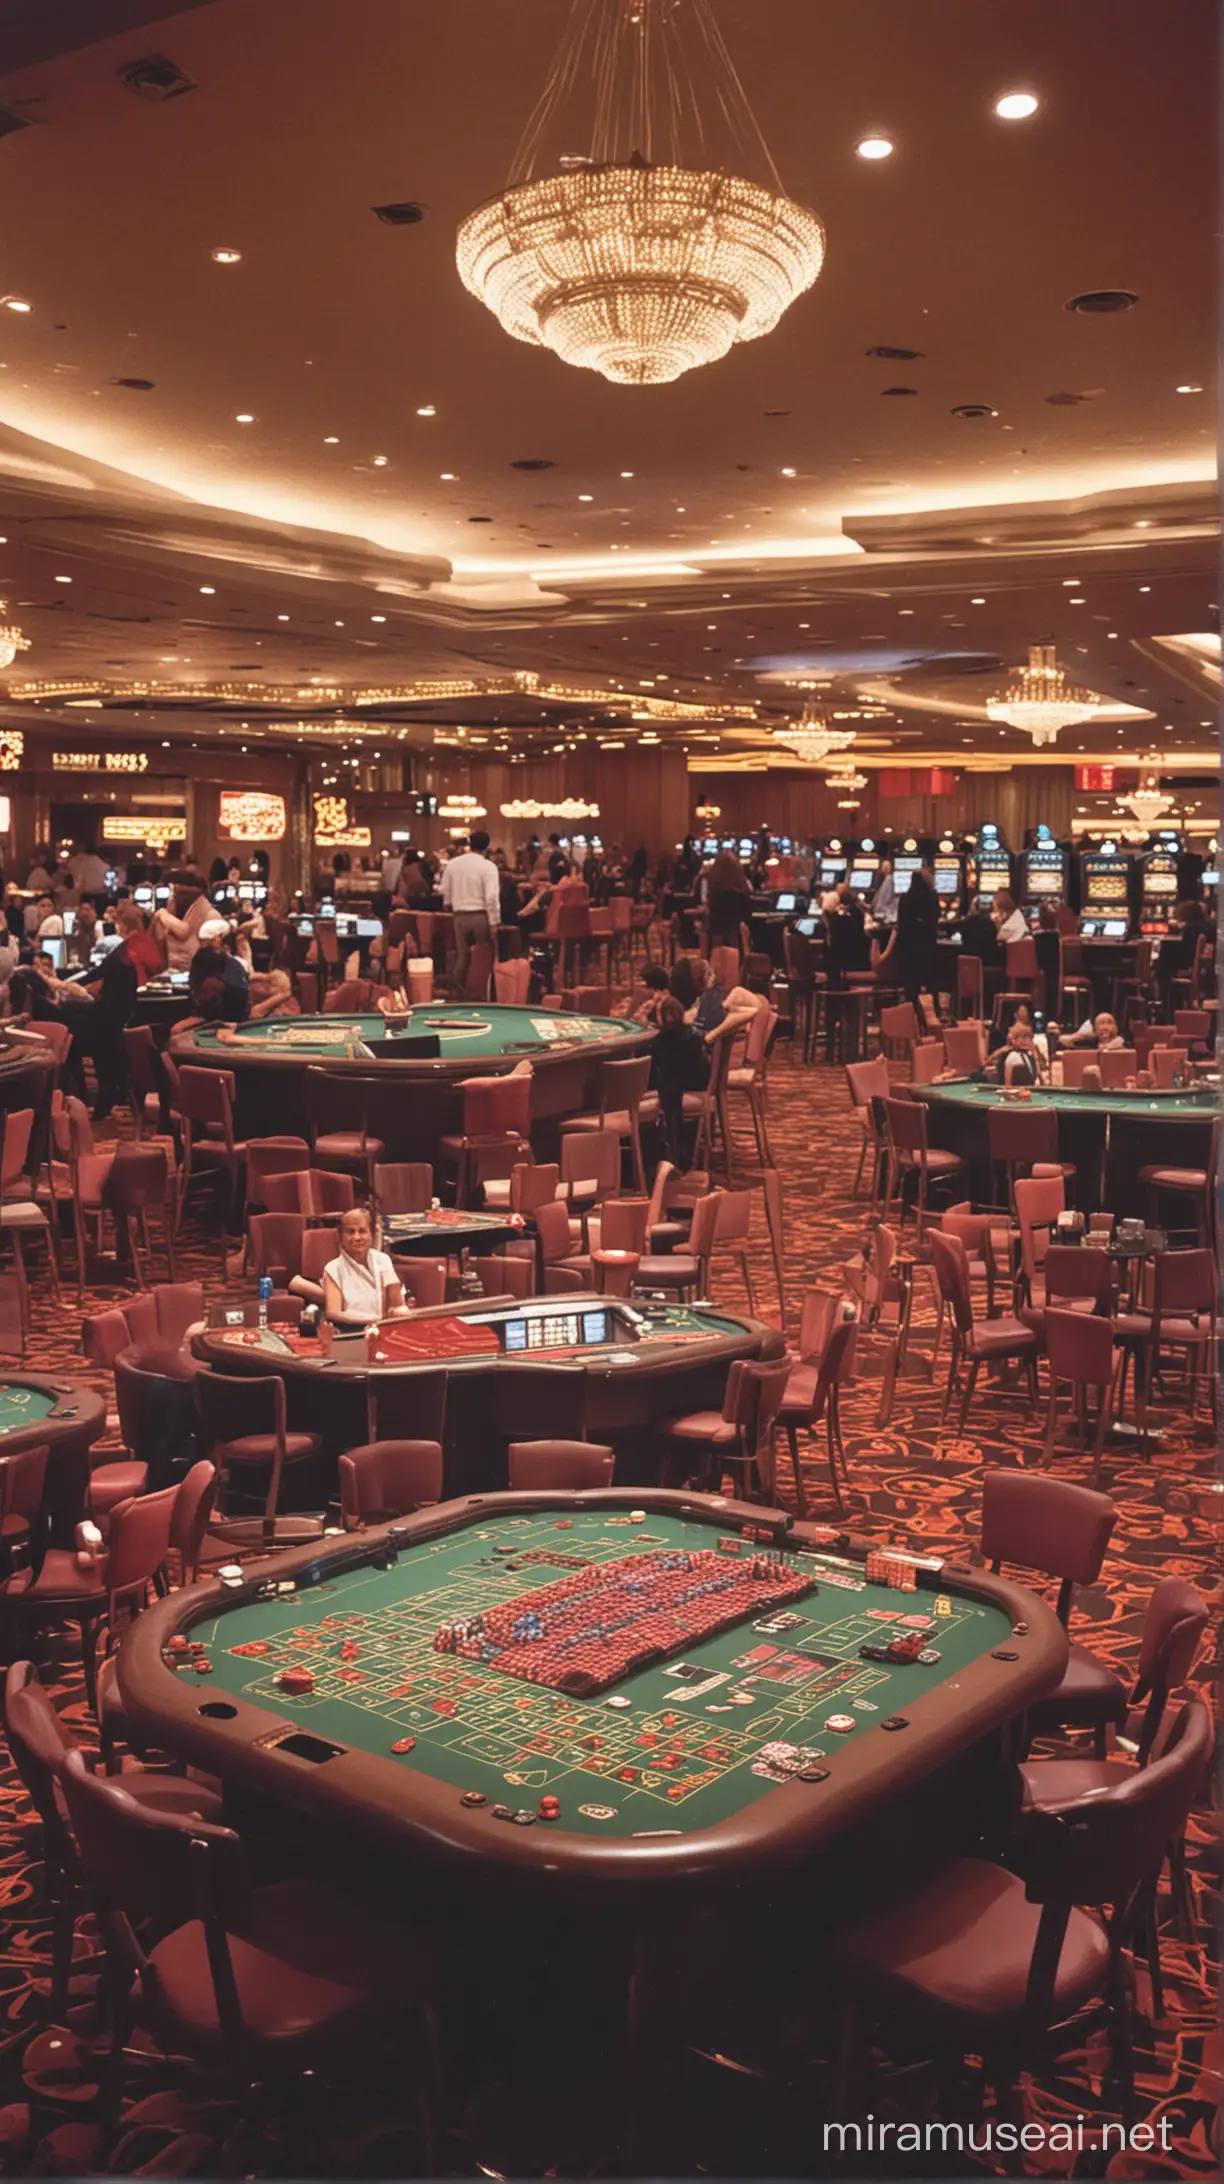 Vibrant 1980s Las Vegas Casino Scene with Neon Lights and Classic Fashion